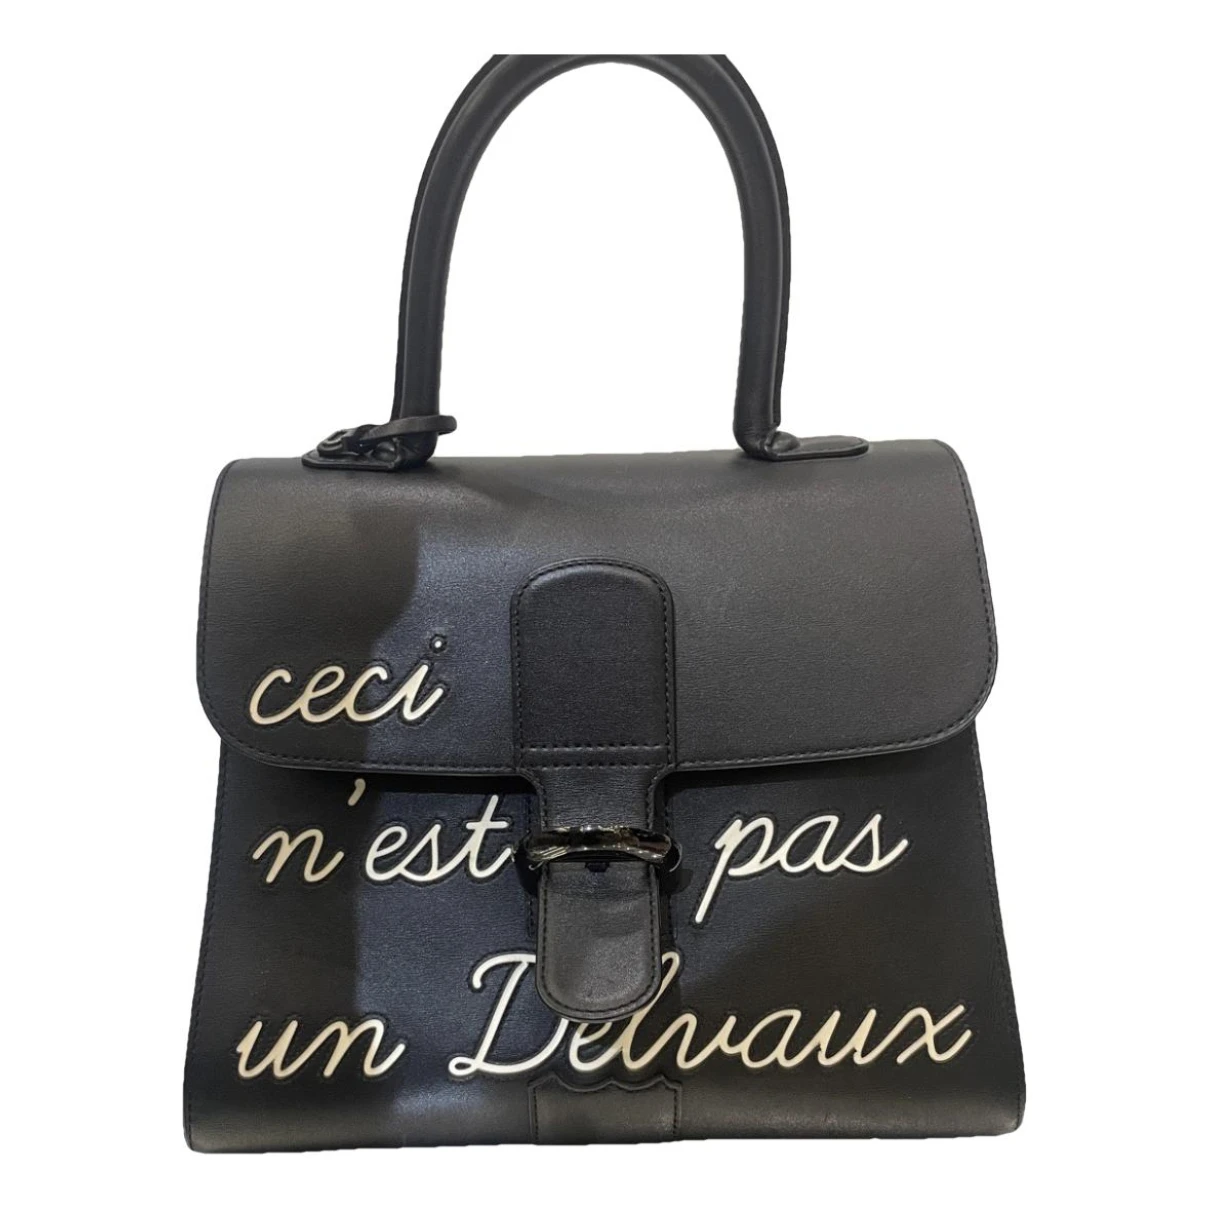 Pre-owned Delvaux Brillant Leather Handbag In Black